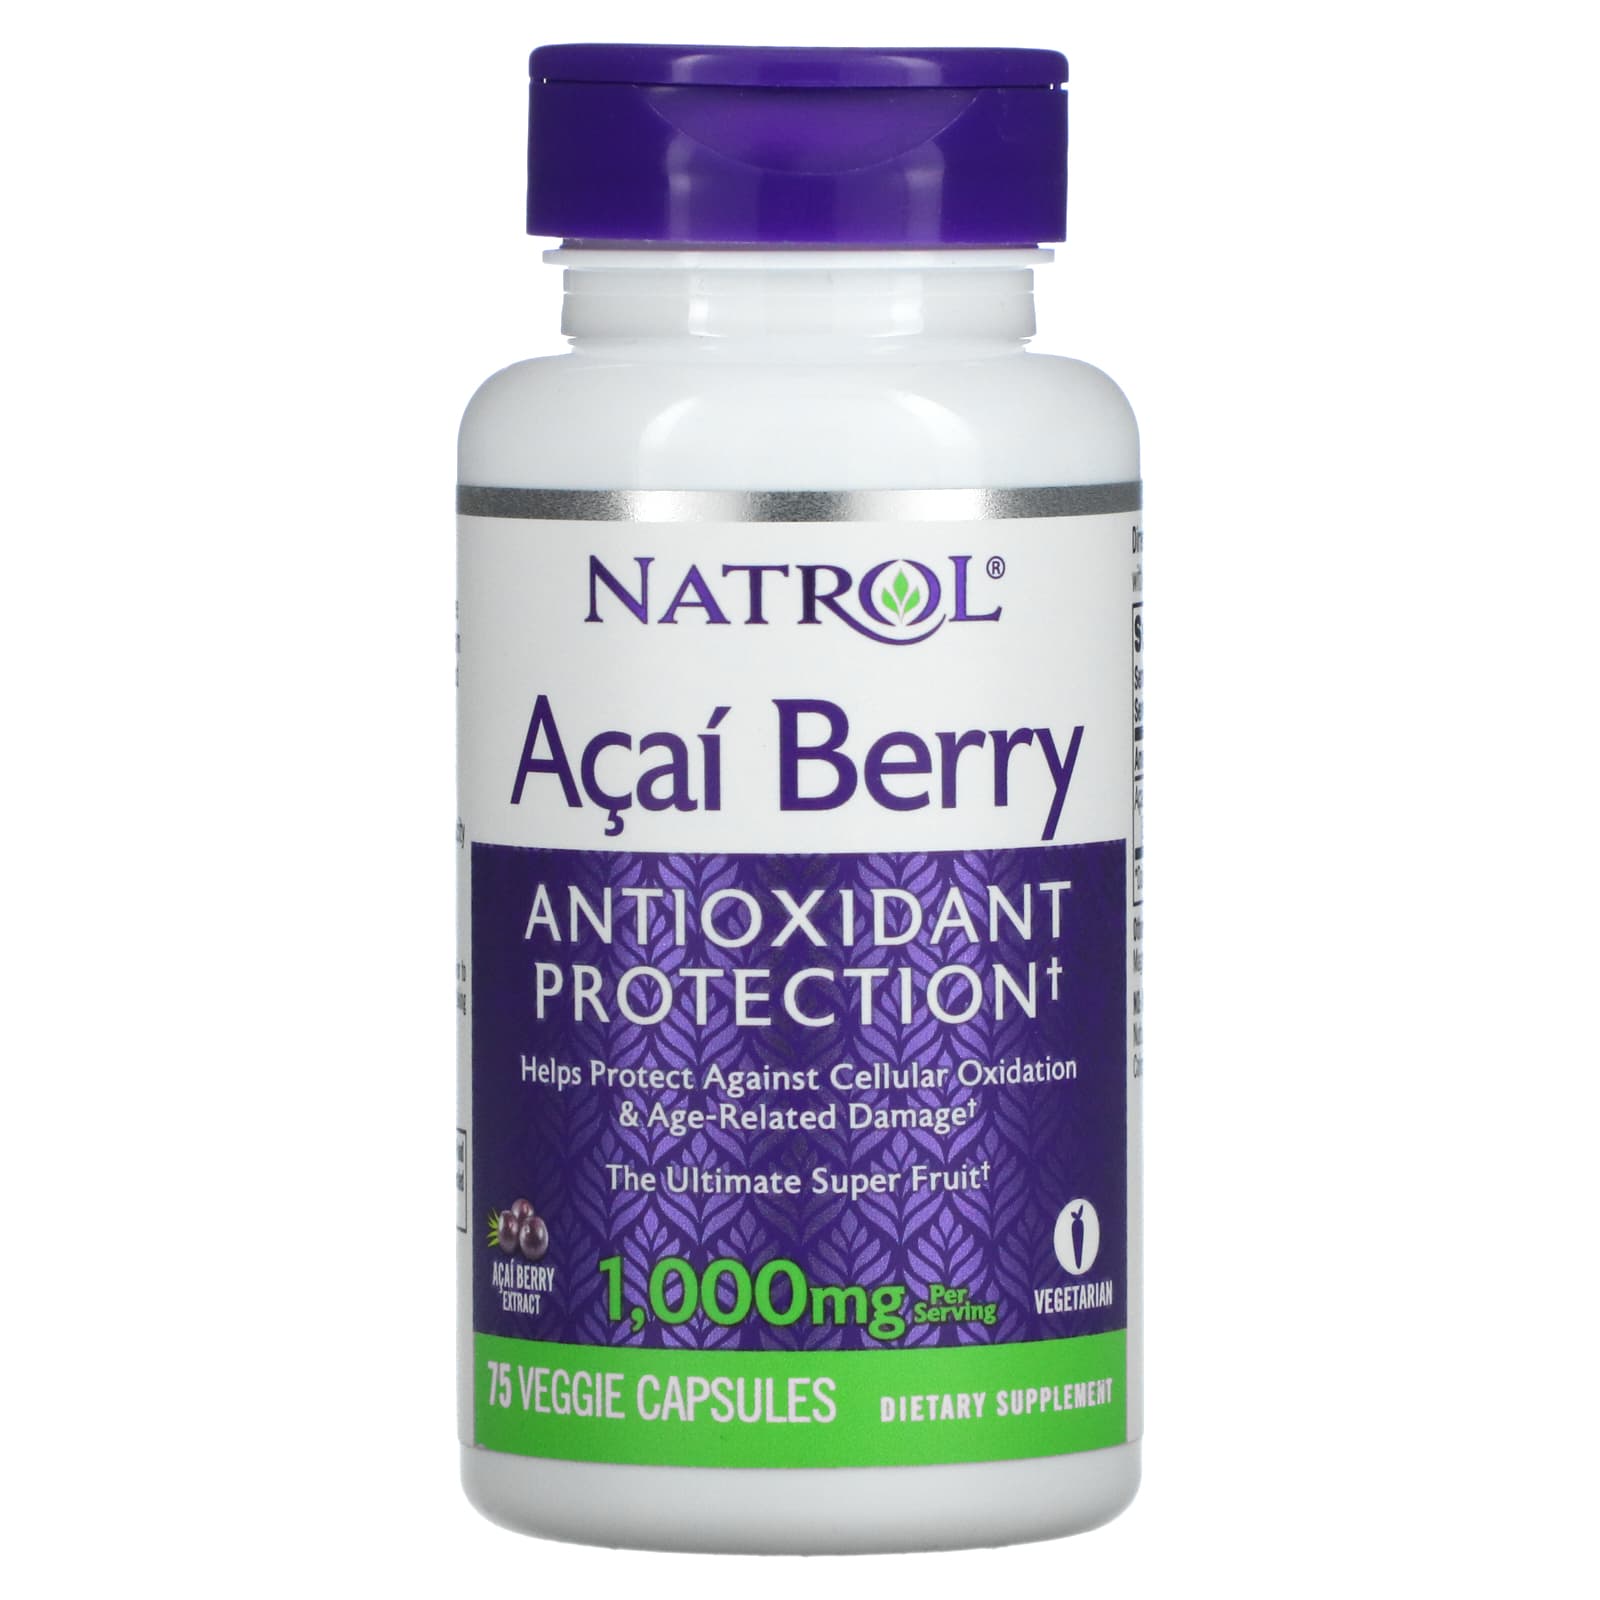 Natrol Acai Berry capsules antioxdant supplements 500 mg - 75 Veggie Caps